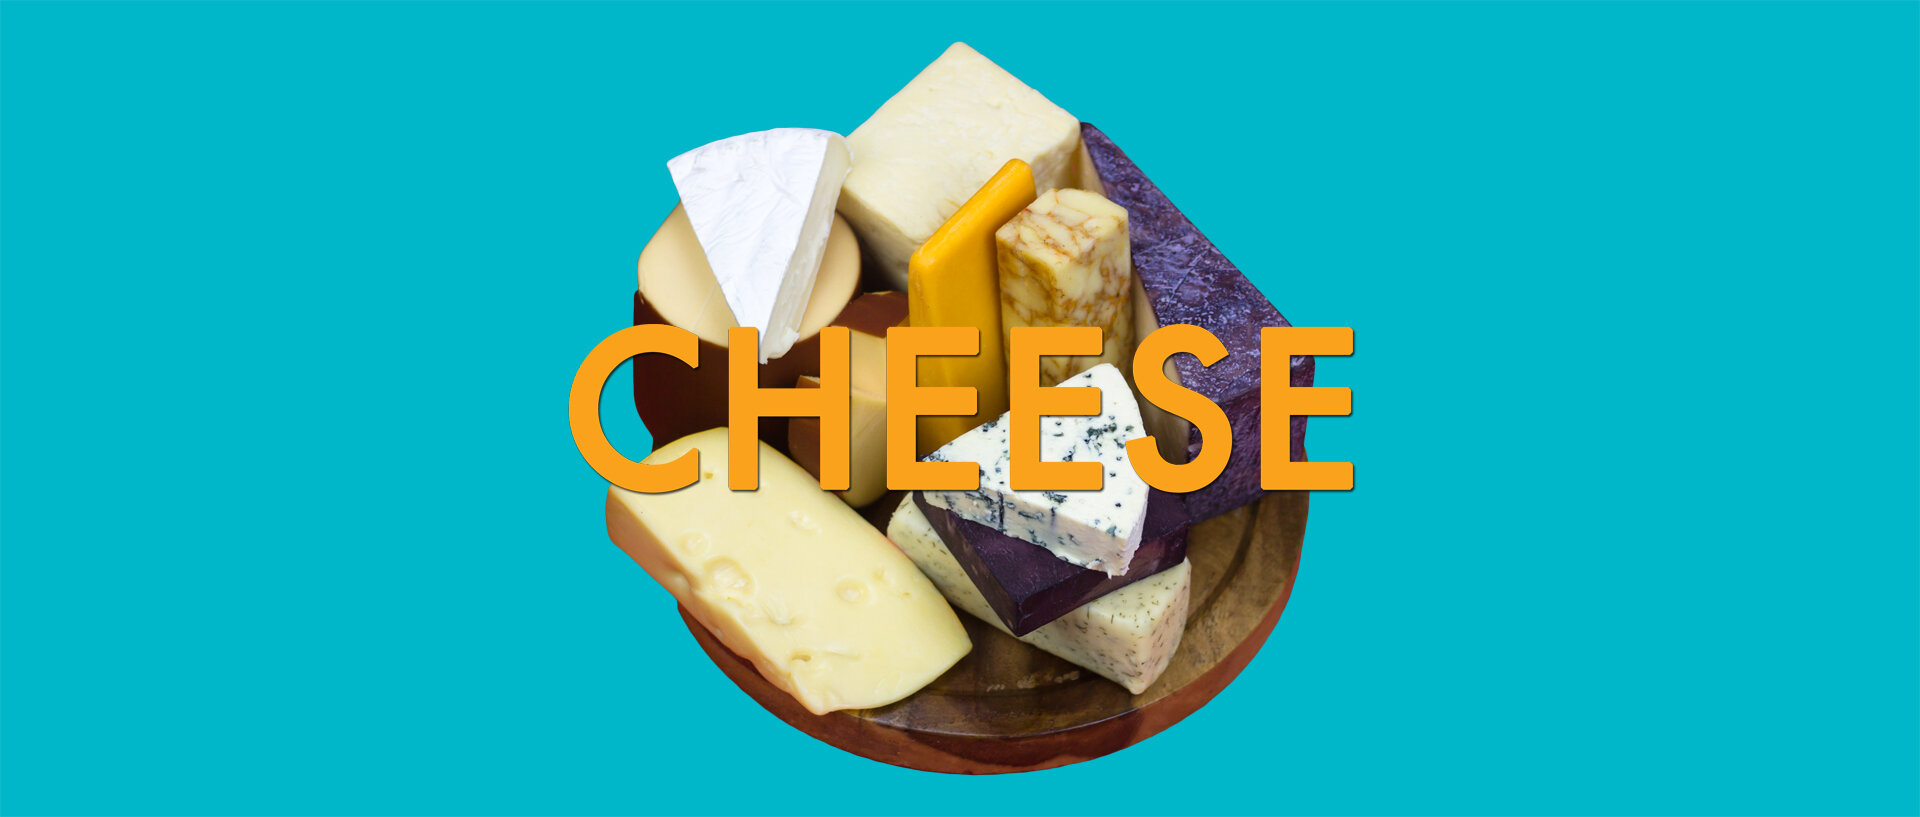 CMB Cheese.jpg